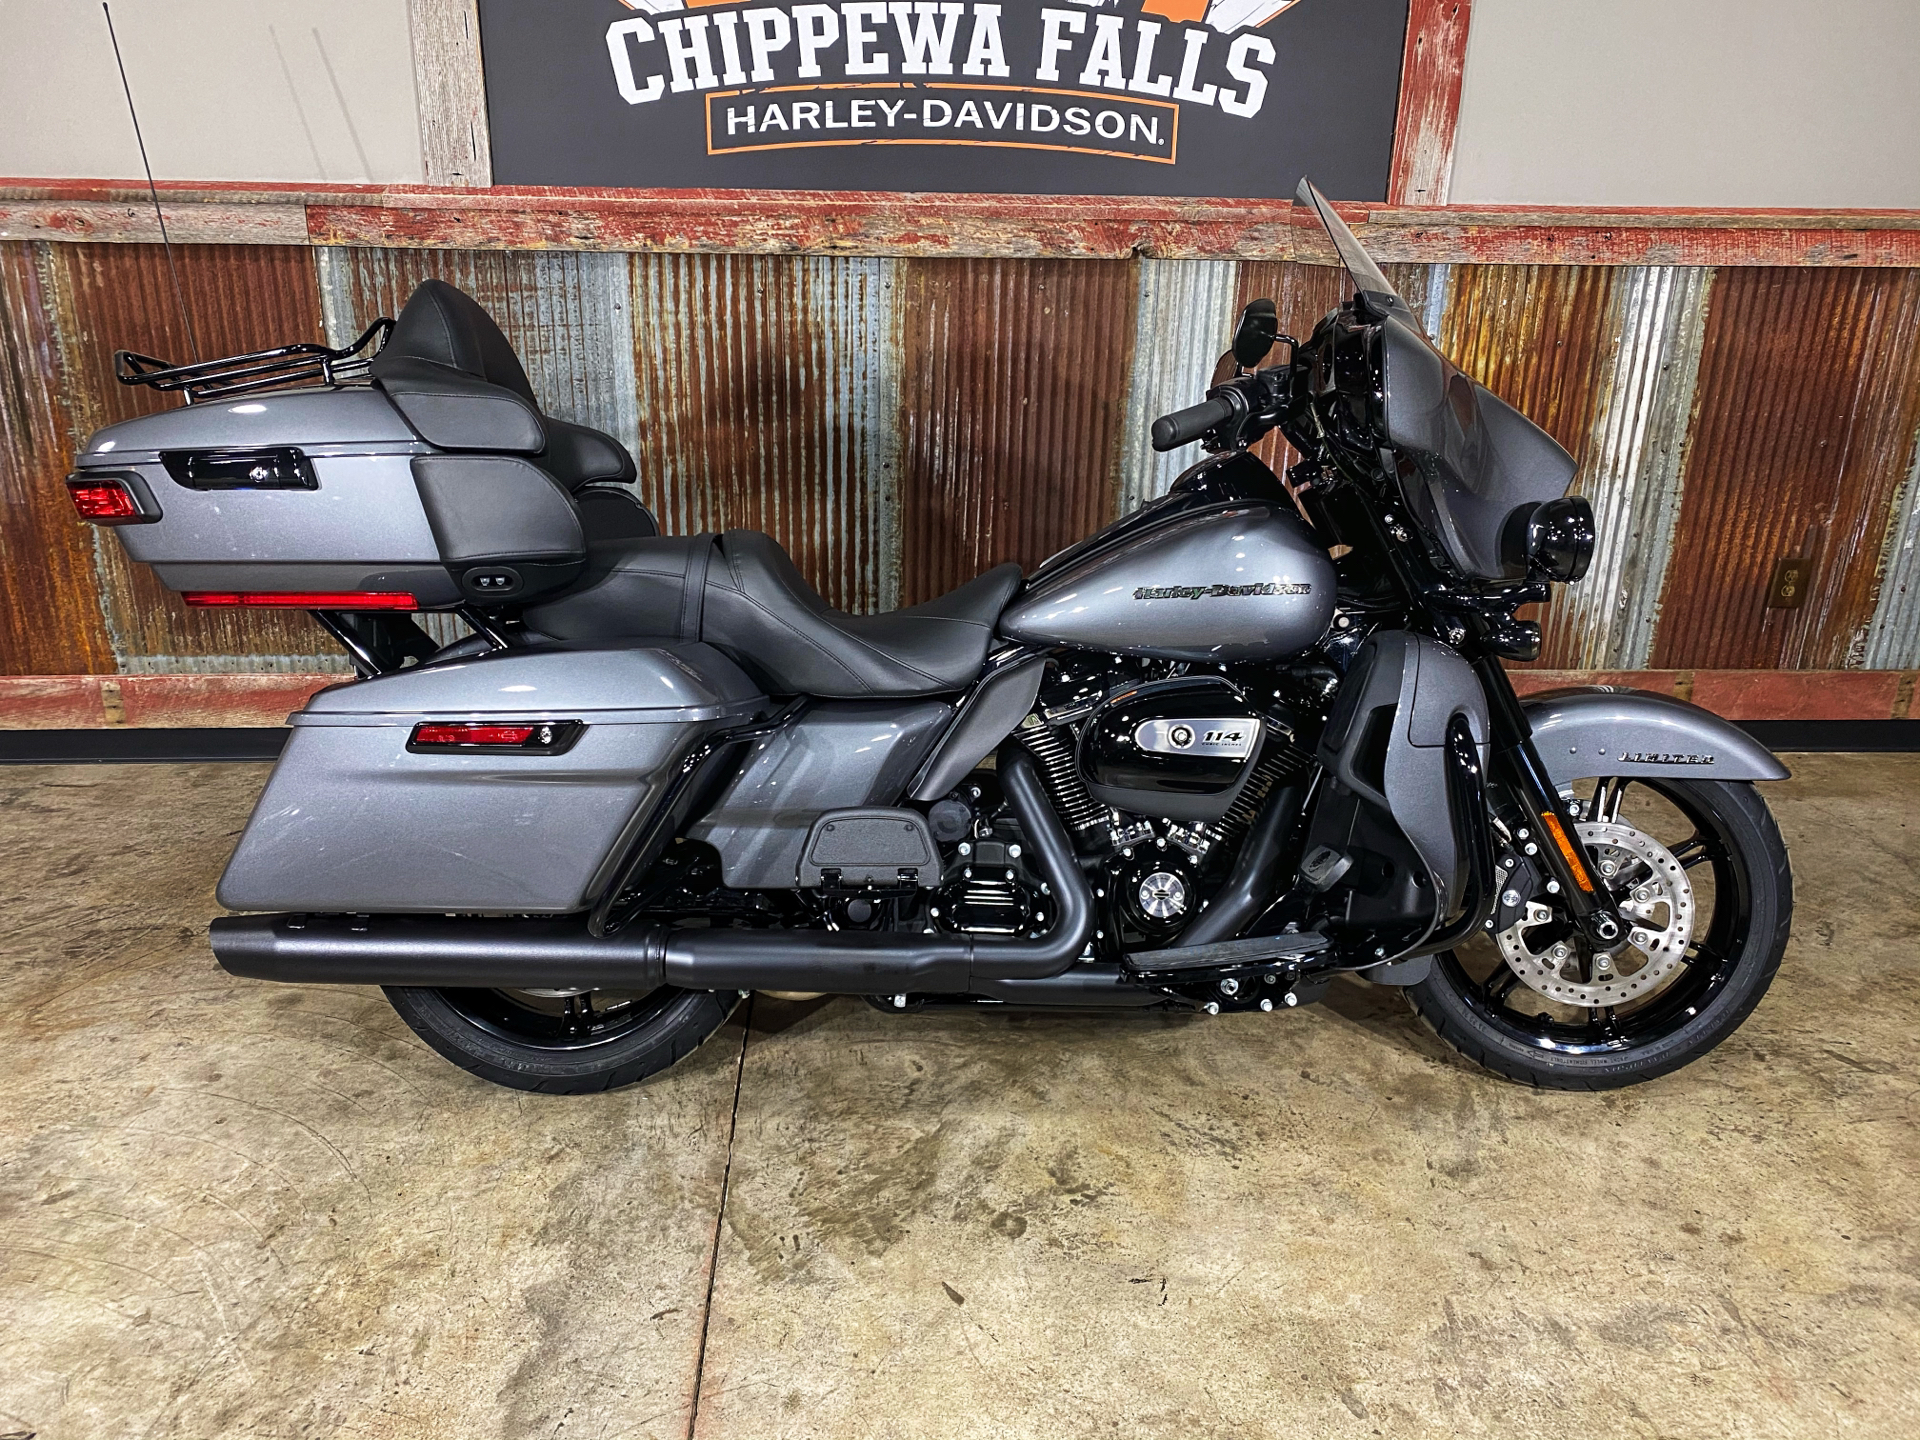 2021 Harley-Davidson Ultra Limited in Chippewa Falls, Wisconsin - Photo 1